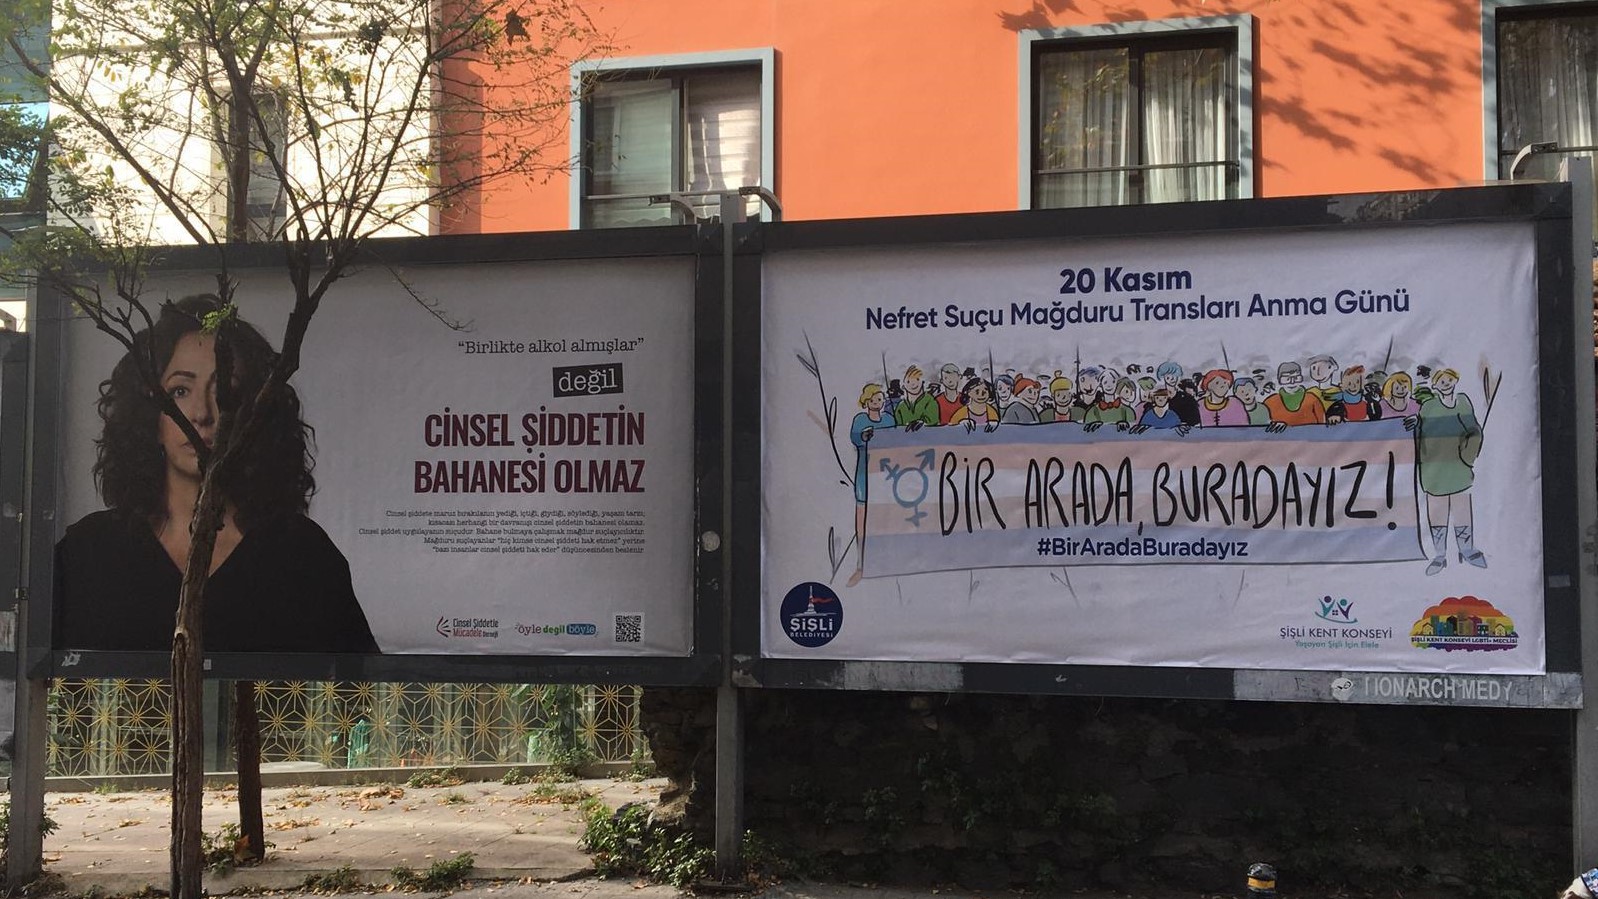 Şişli ve Kadıköy’den mesaj: “Bir arada, buradayız” | Kaos GL - LGBTİ+ Haber Portalı